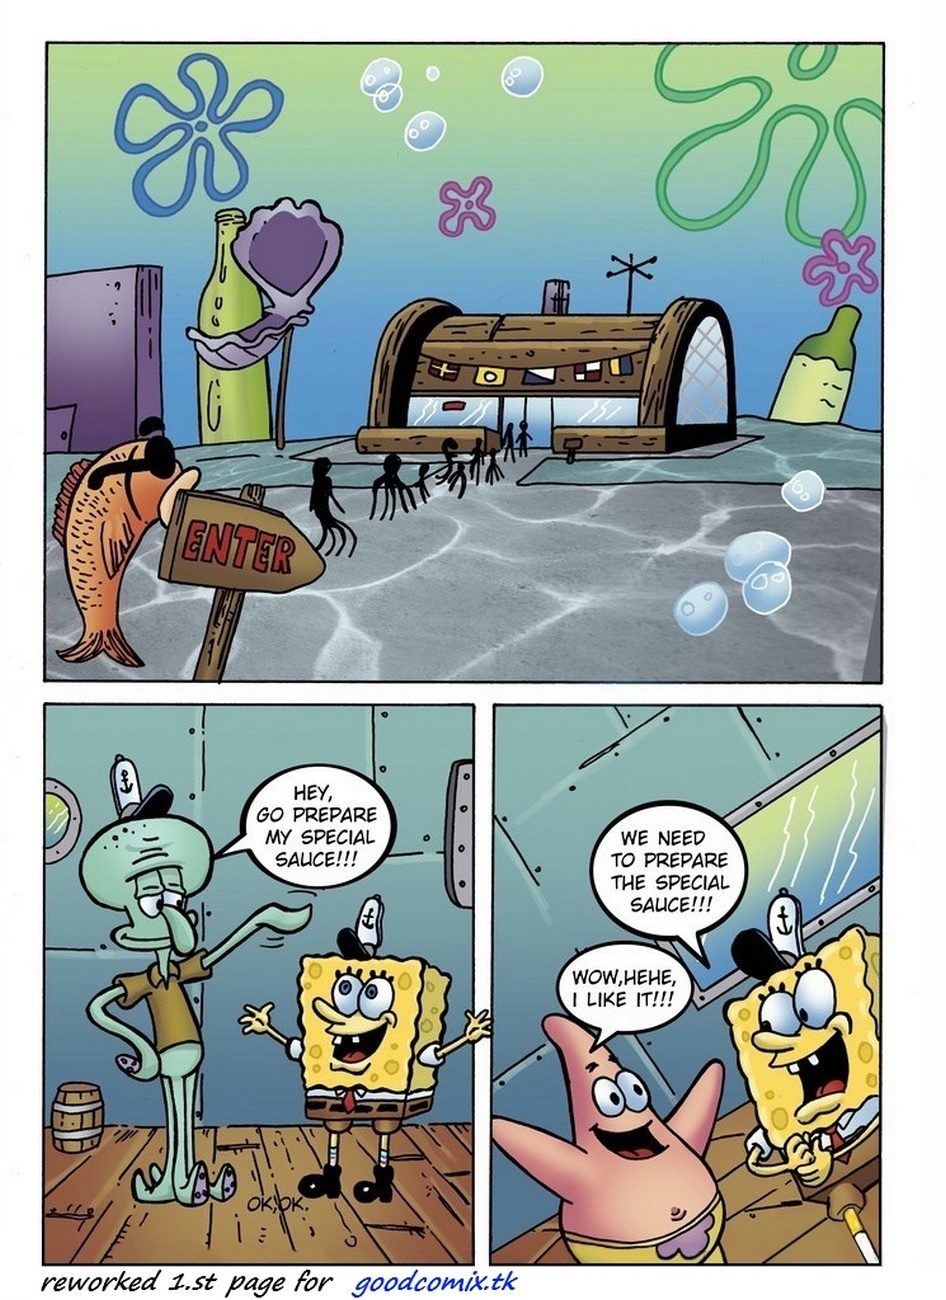 Funny SpongeBob cartoon porn pics best quality | Cartoon Sex